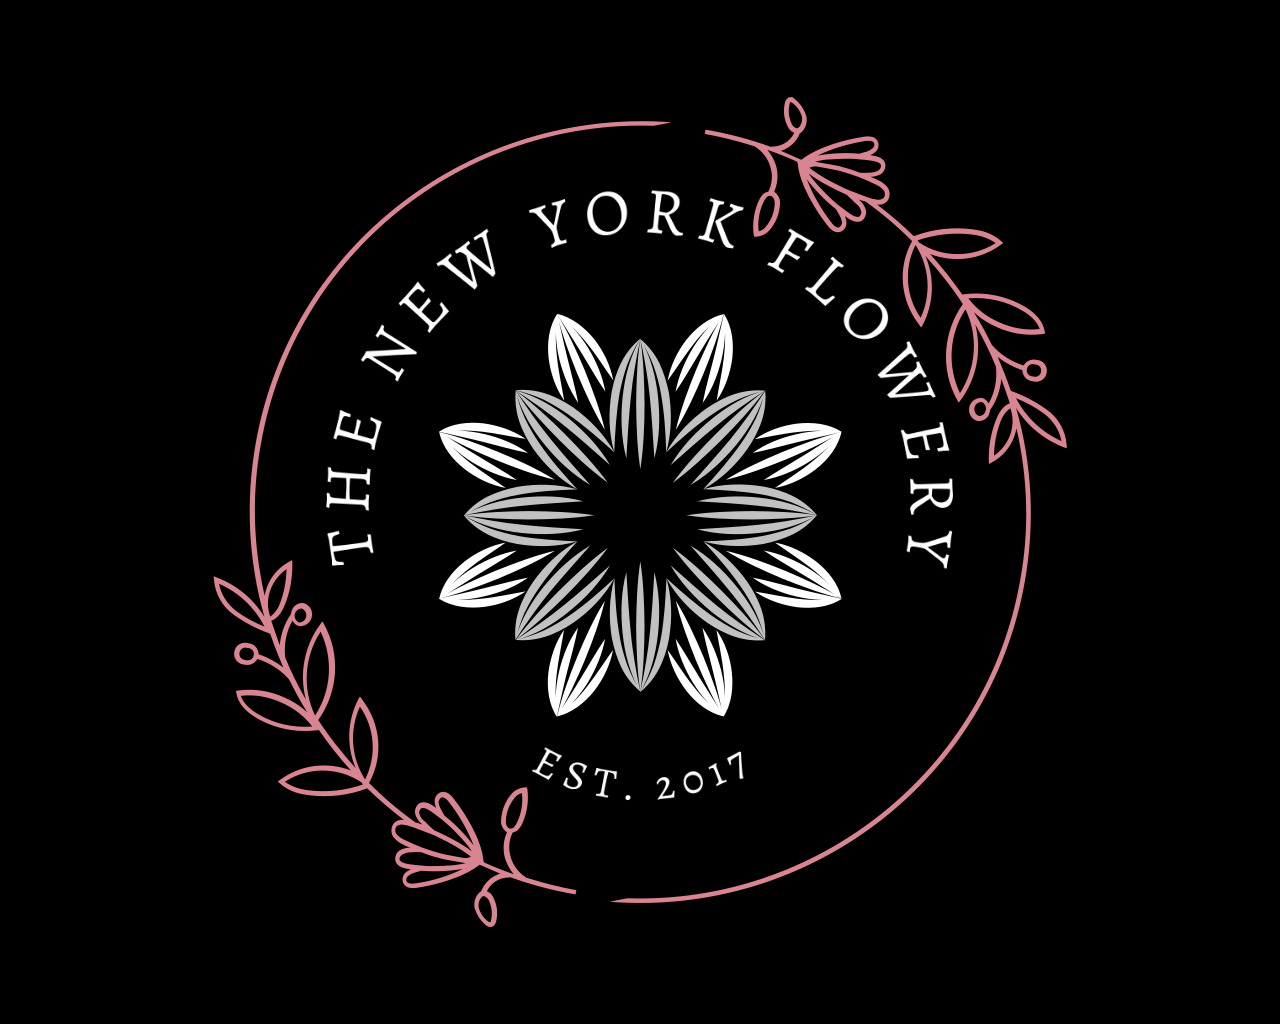 THE NEW YORK FLOWERY's logo